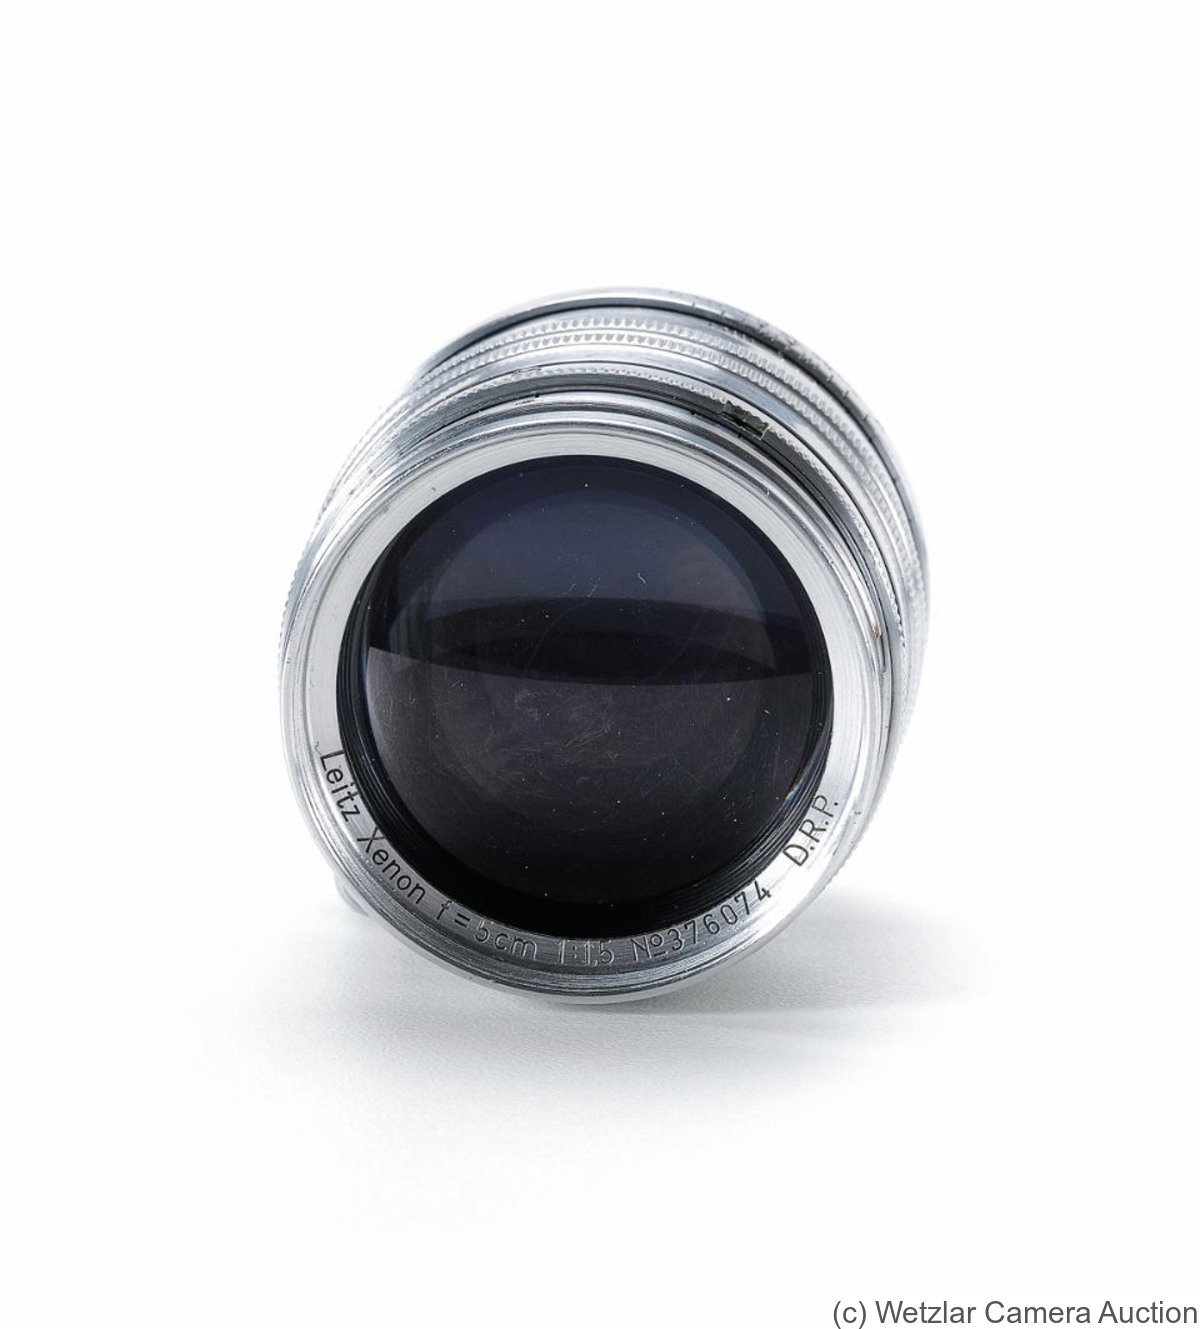 Leitz: 50mm (5cm) f1.5 Xenon (SM, 2-rings, silver front) camera